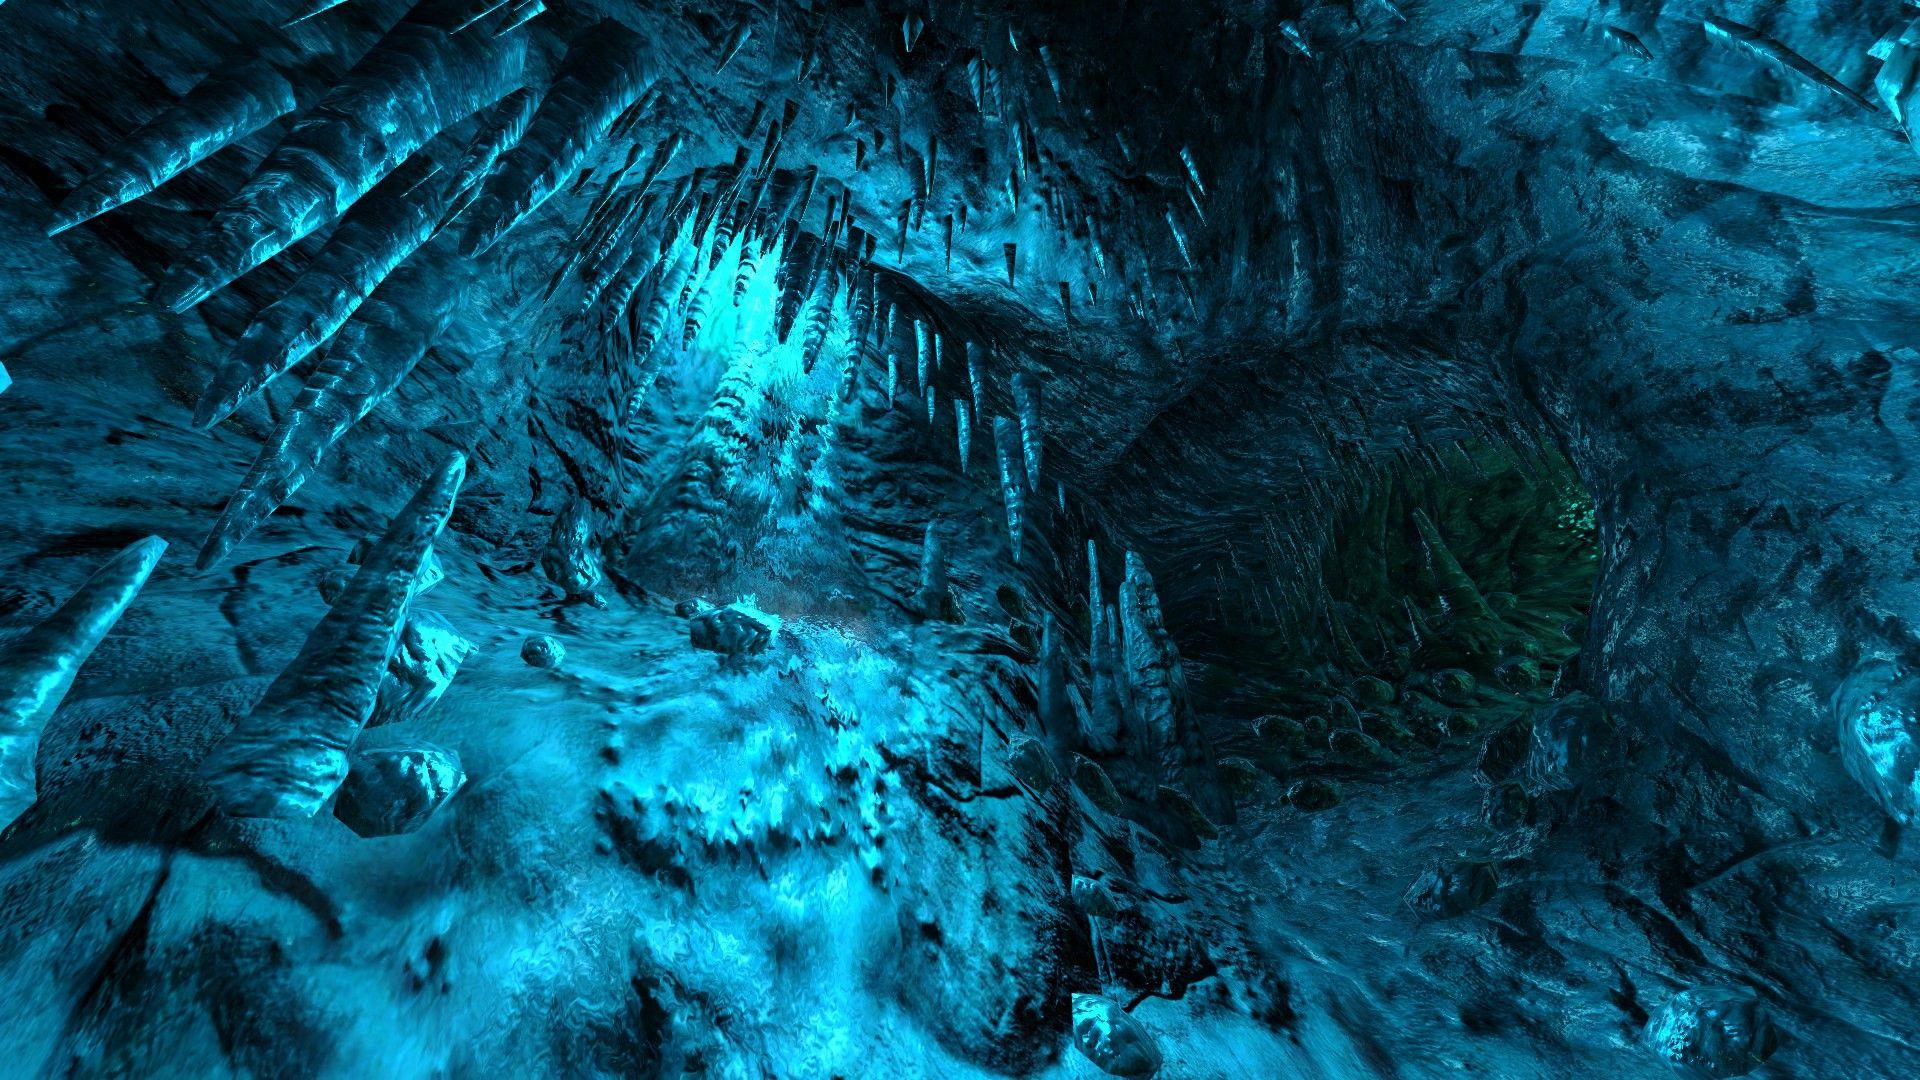 Underwater Cave Wallpapers - Top Free Underwater Cave Backgrounds ...